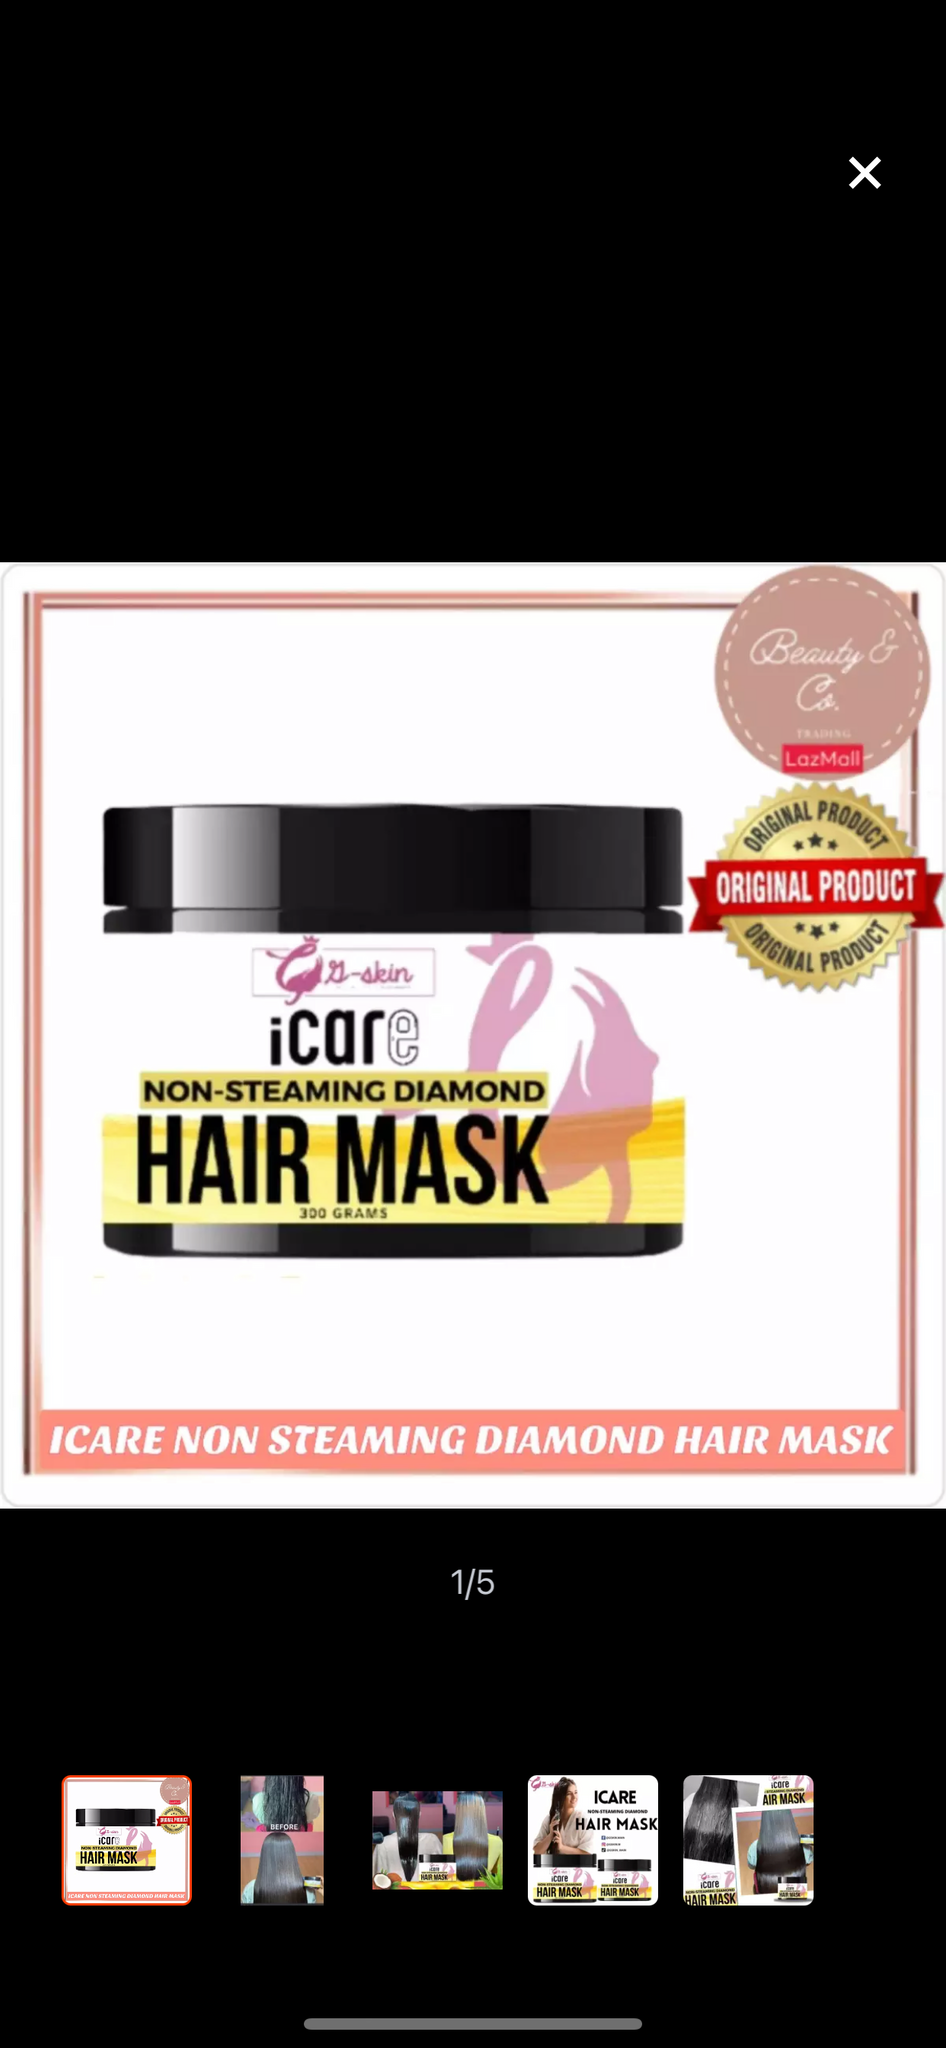 Icare Non Steaming Diamond Hair Mask 300g